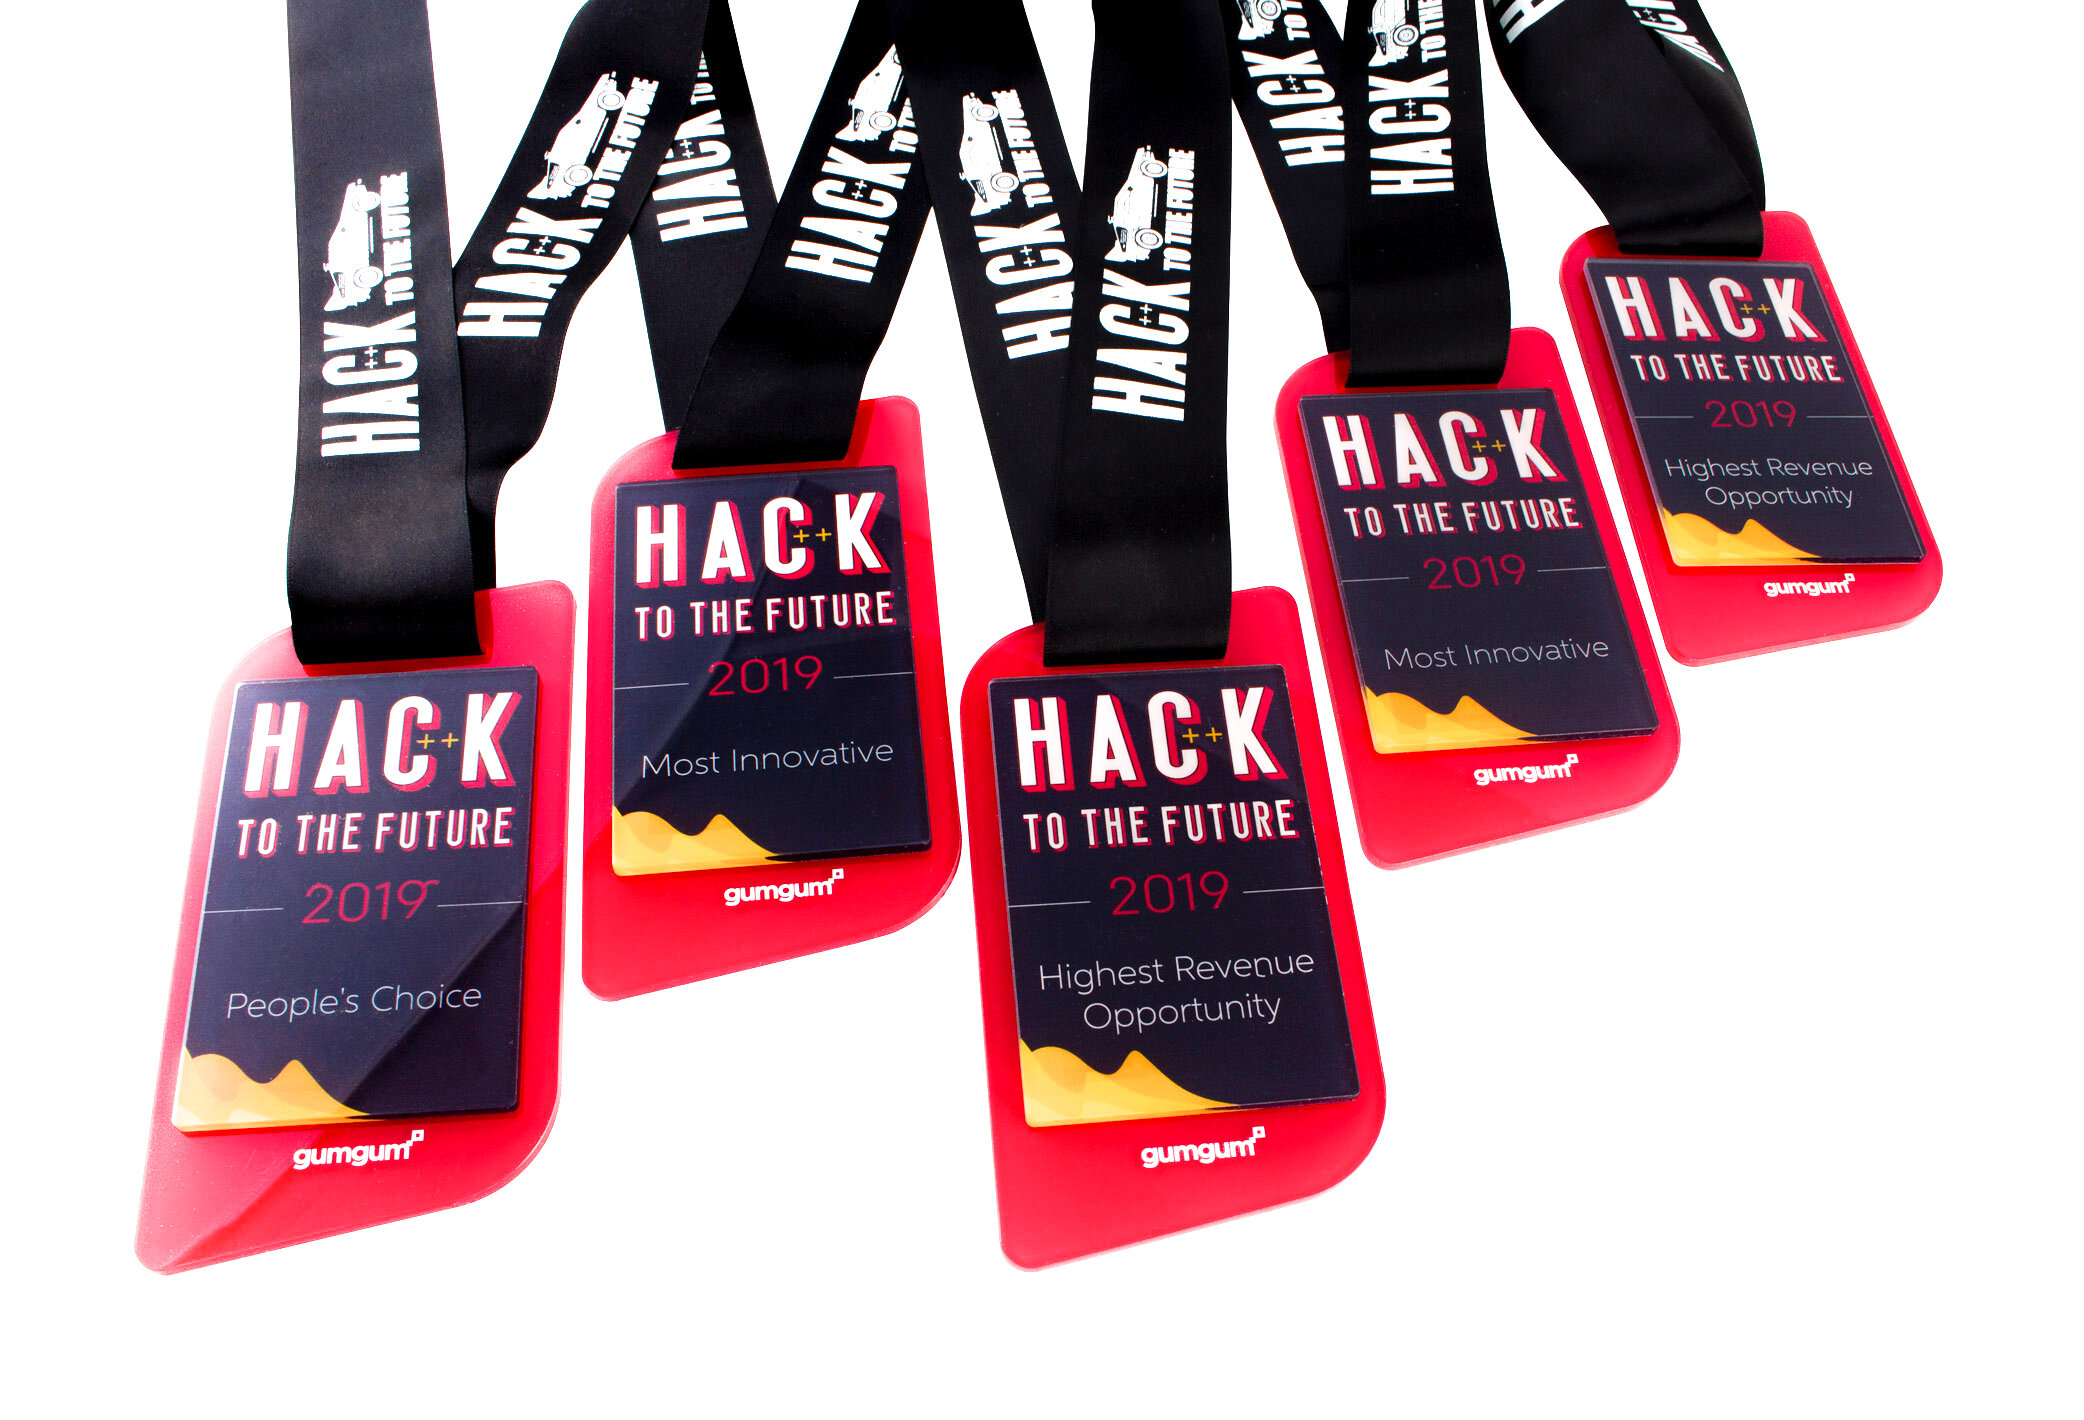 GumGum Hackathon Hack to the future tech medals custom